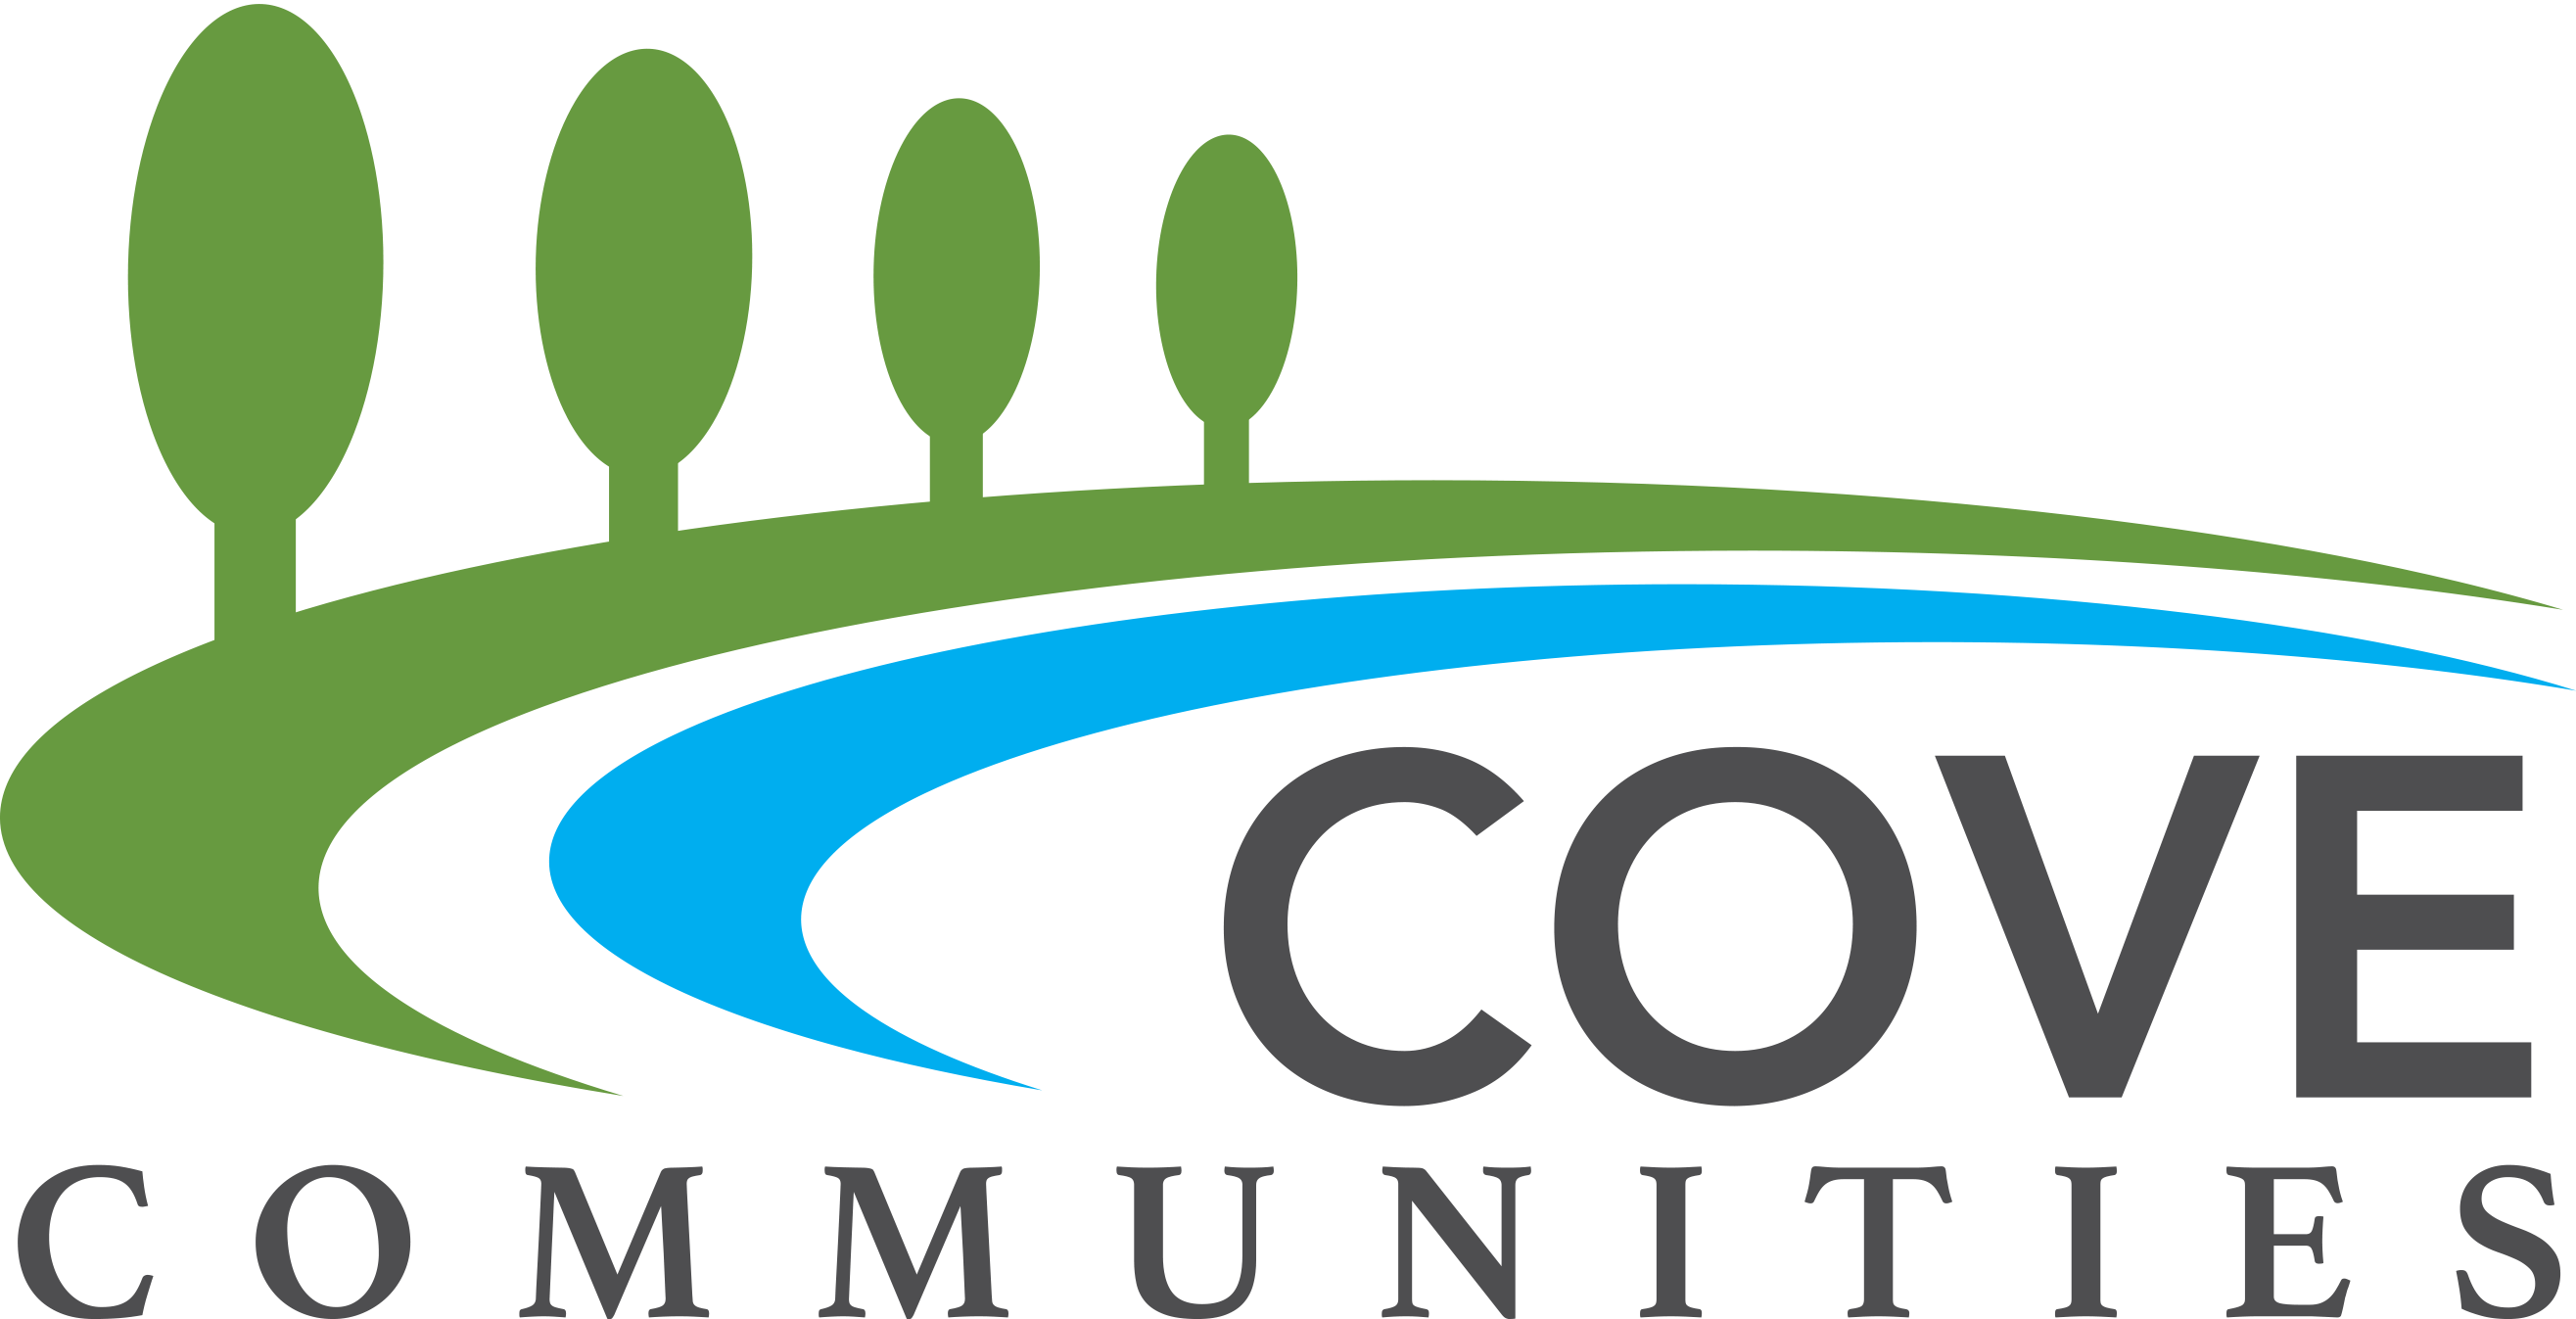 Cove Communities